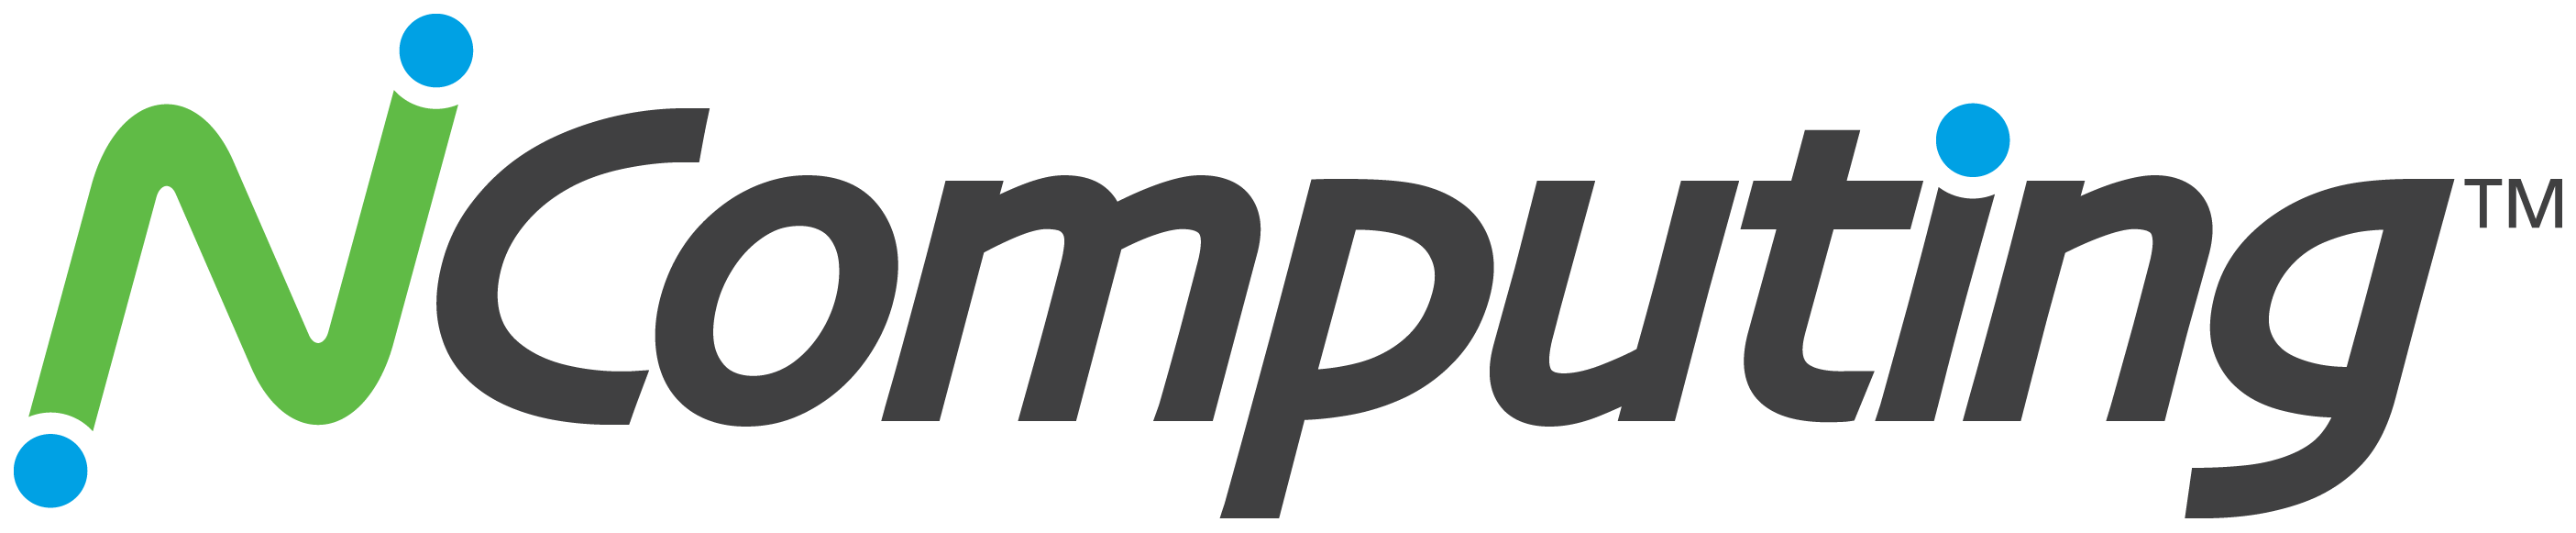 NComputing Logo photo - 1